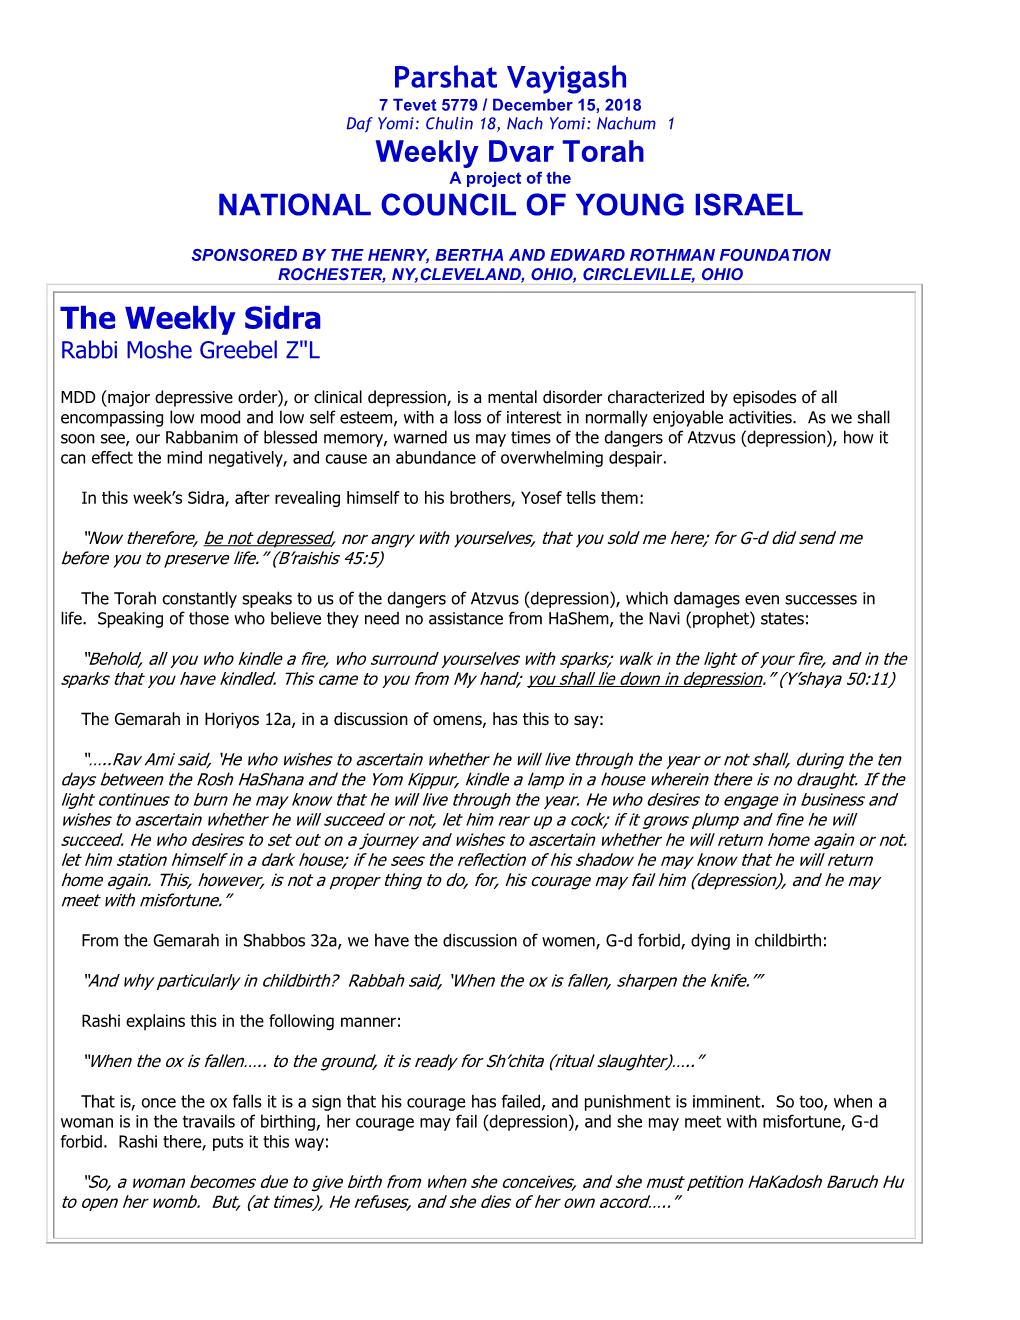 Parshat Vayigash Weekly Dvar Torah NATIONAL COUNCIL of YOUNG